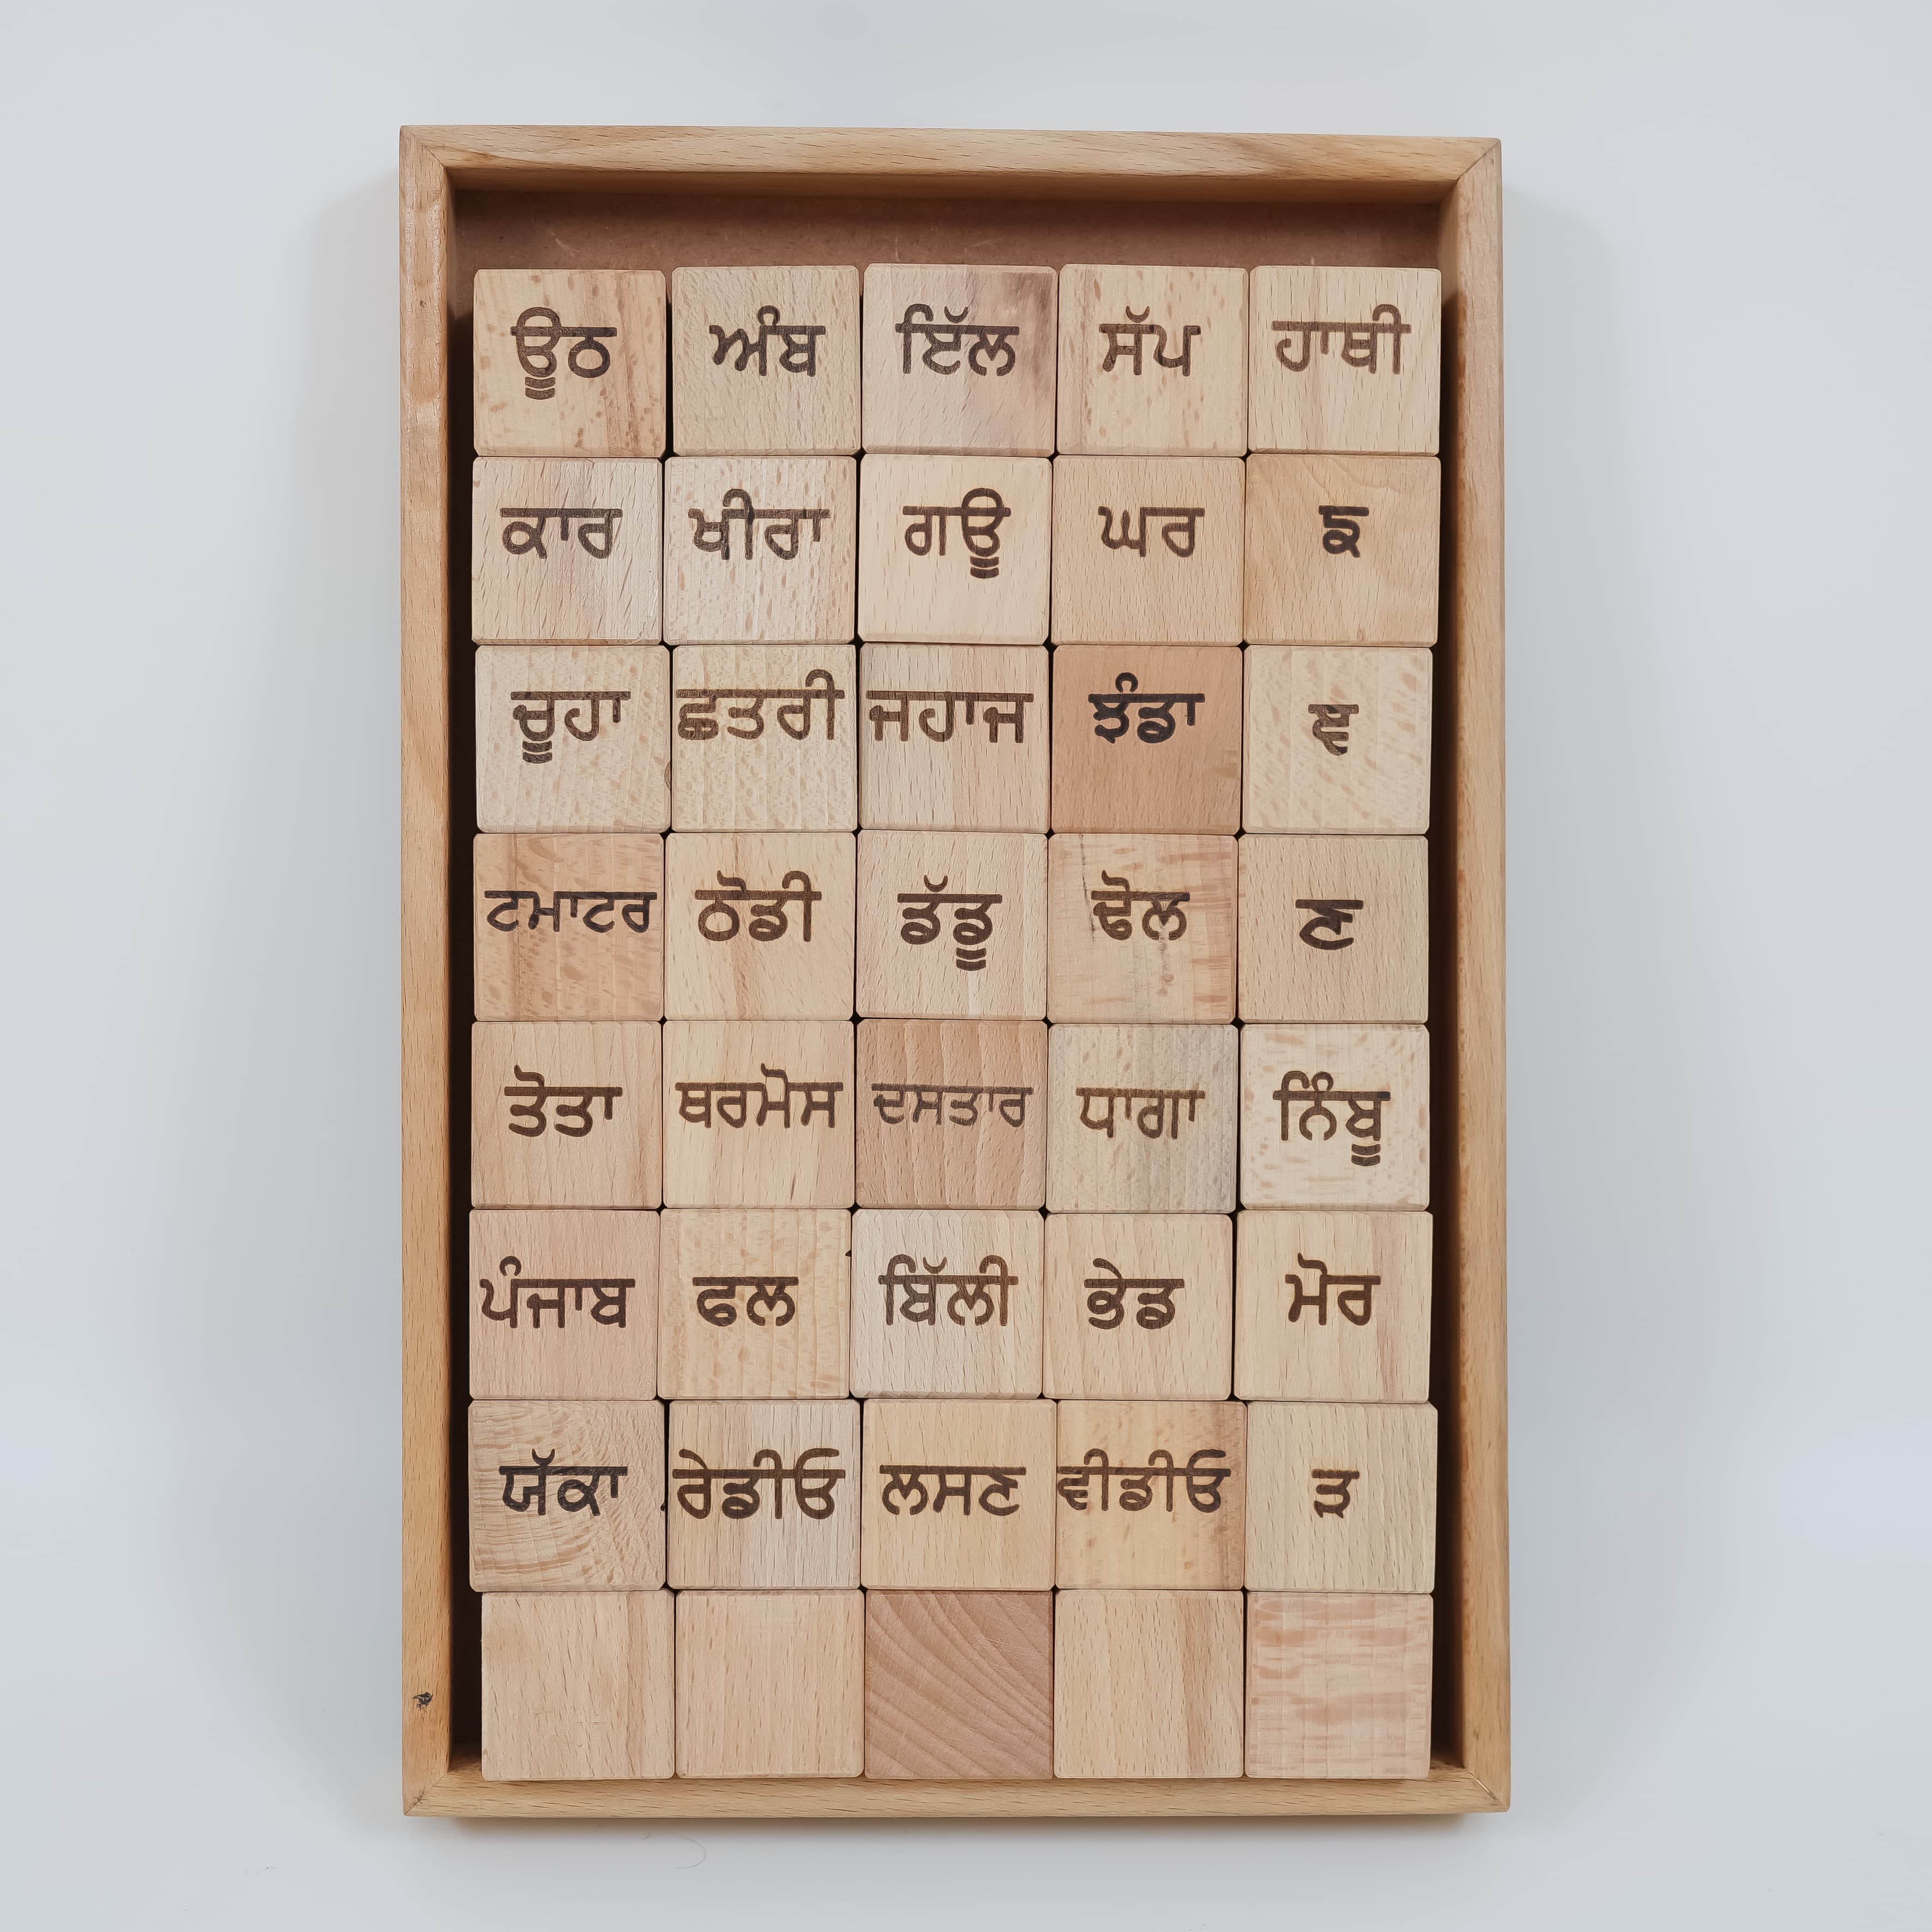 Punjabi Alphabet Wooden Blocks Toys